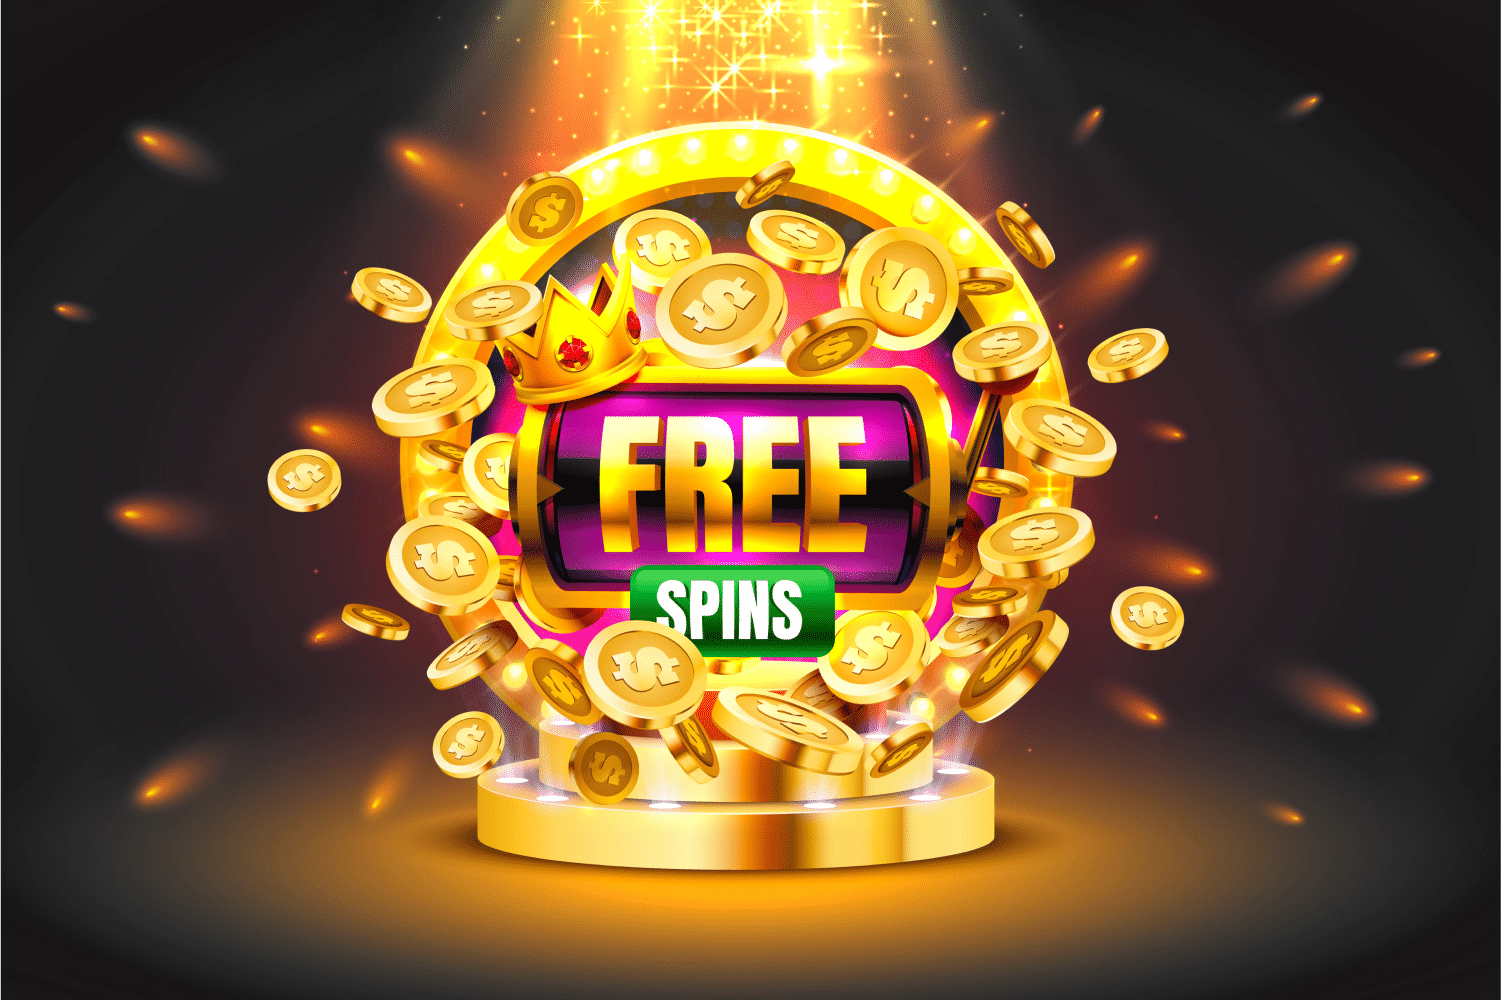 Casino bonus free spins kghyxwl df